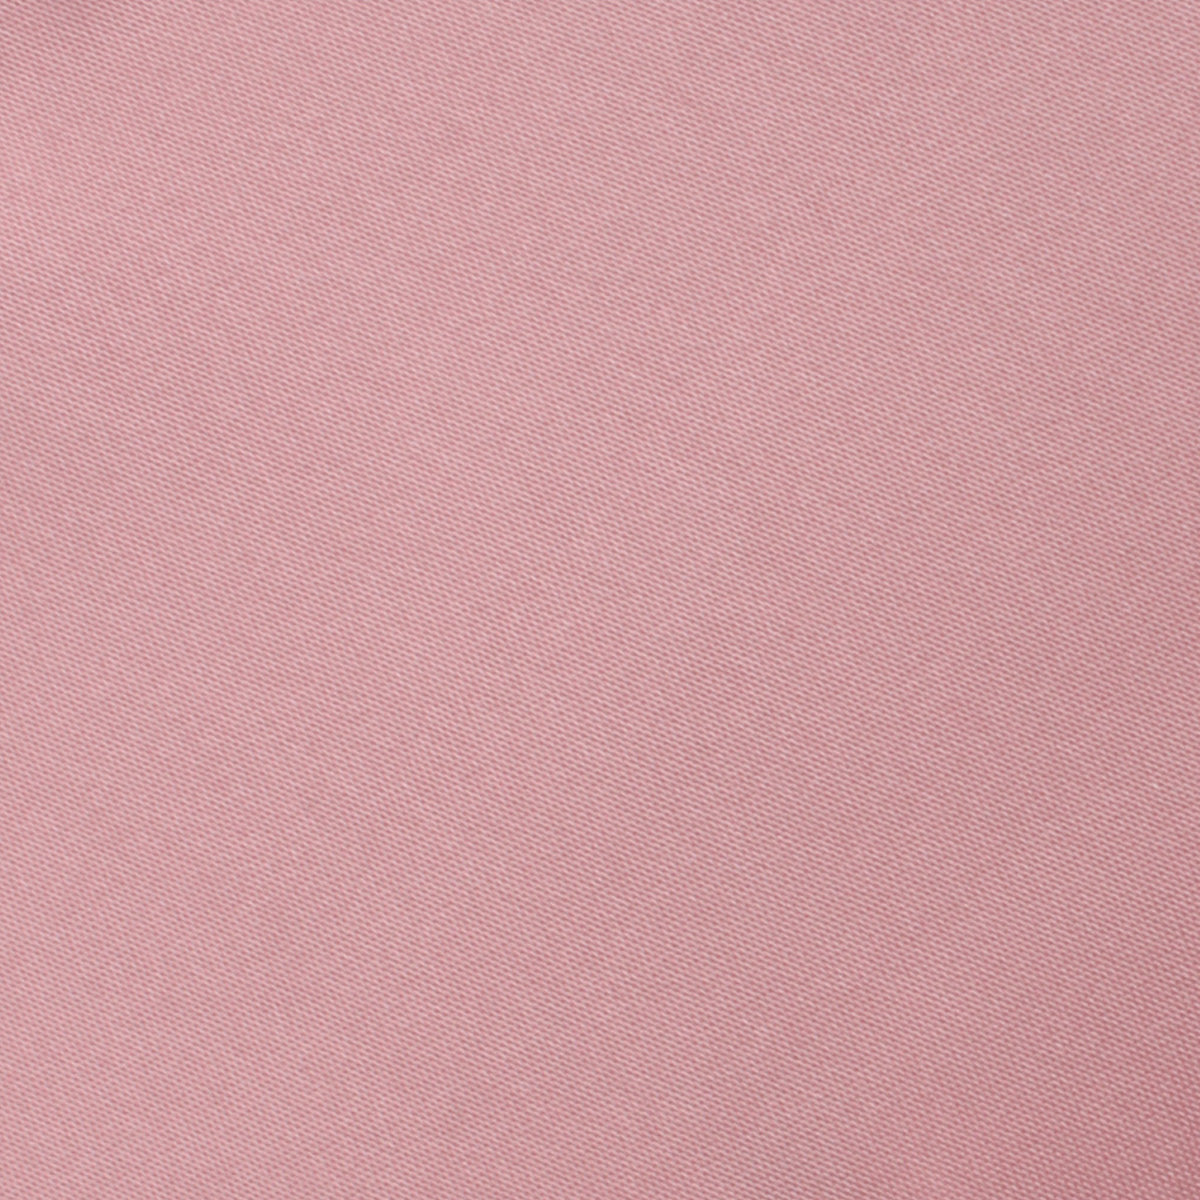 Dusty Blush Pink Satin Pocket Square Fabric